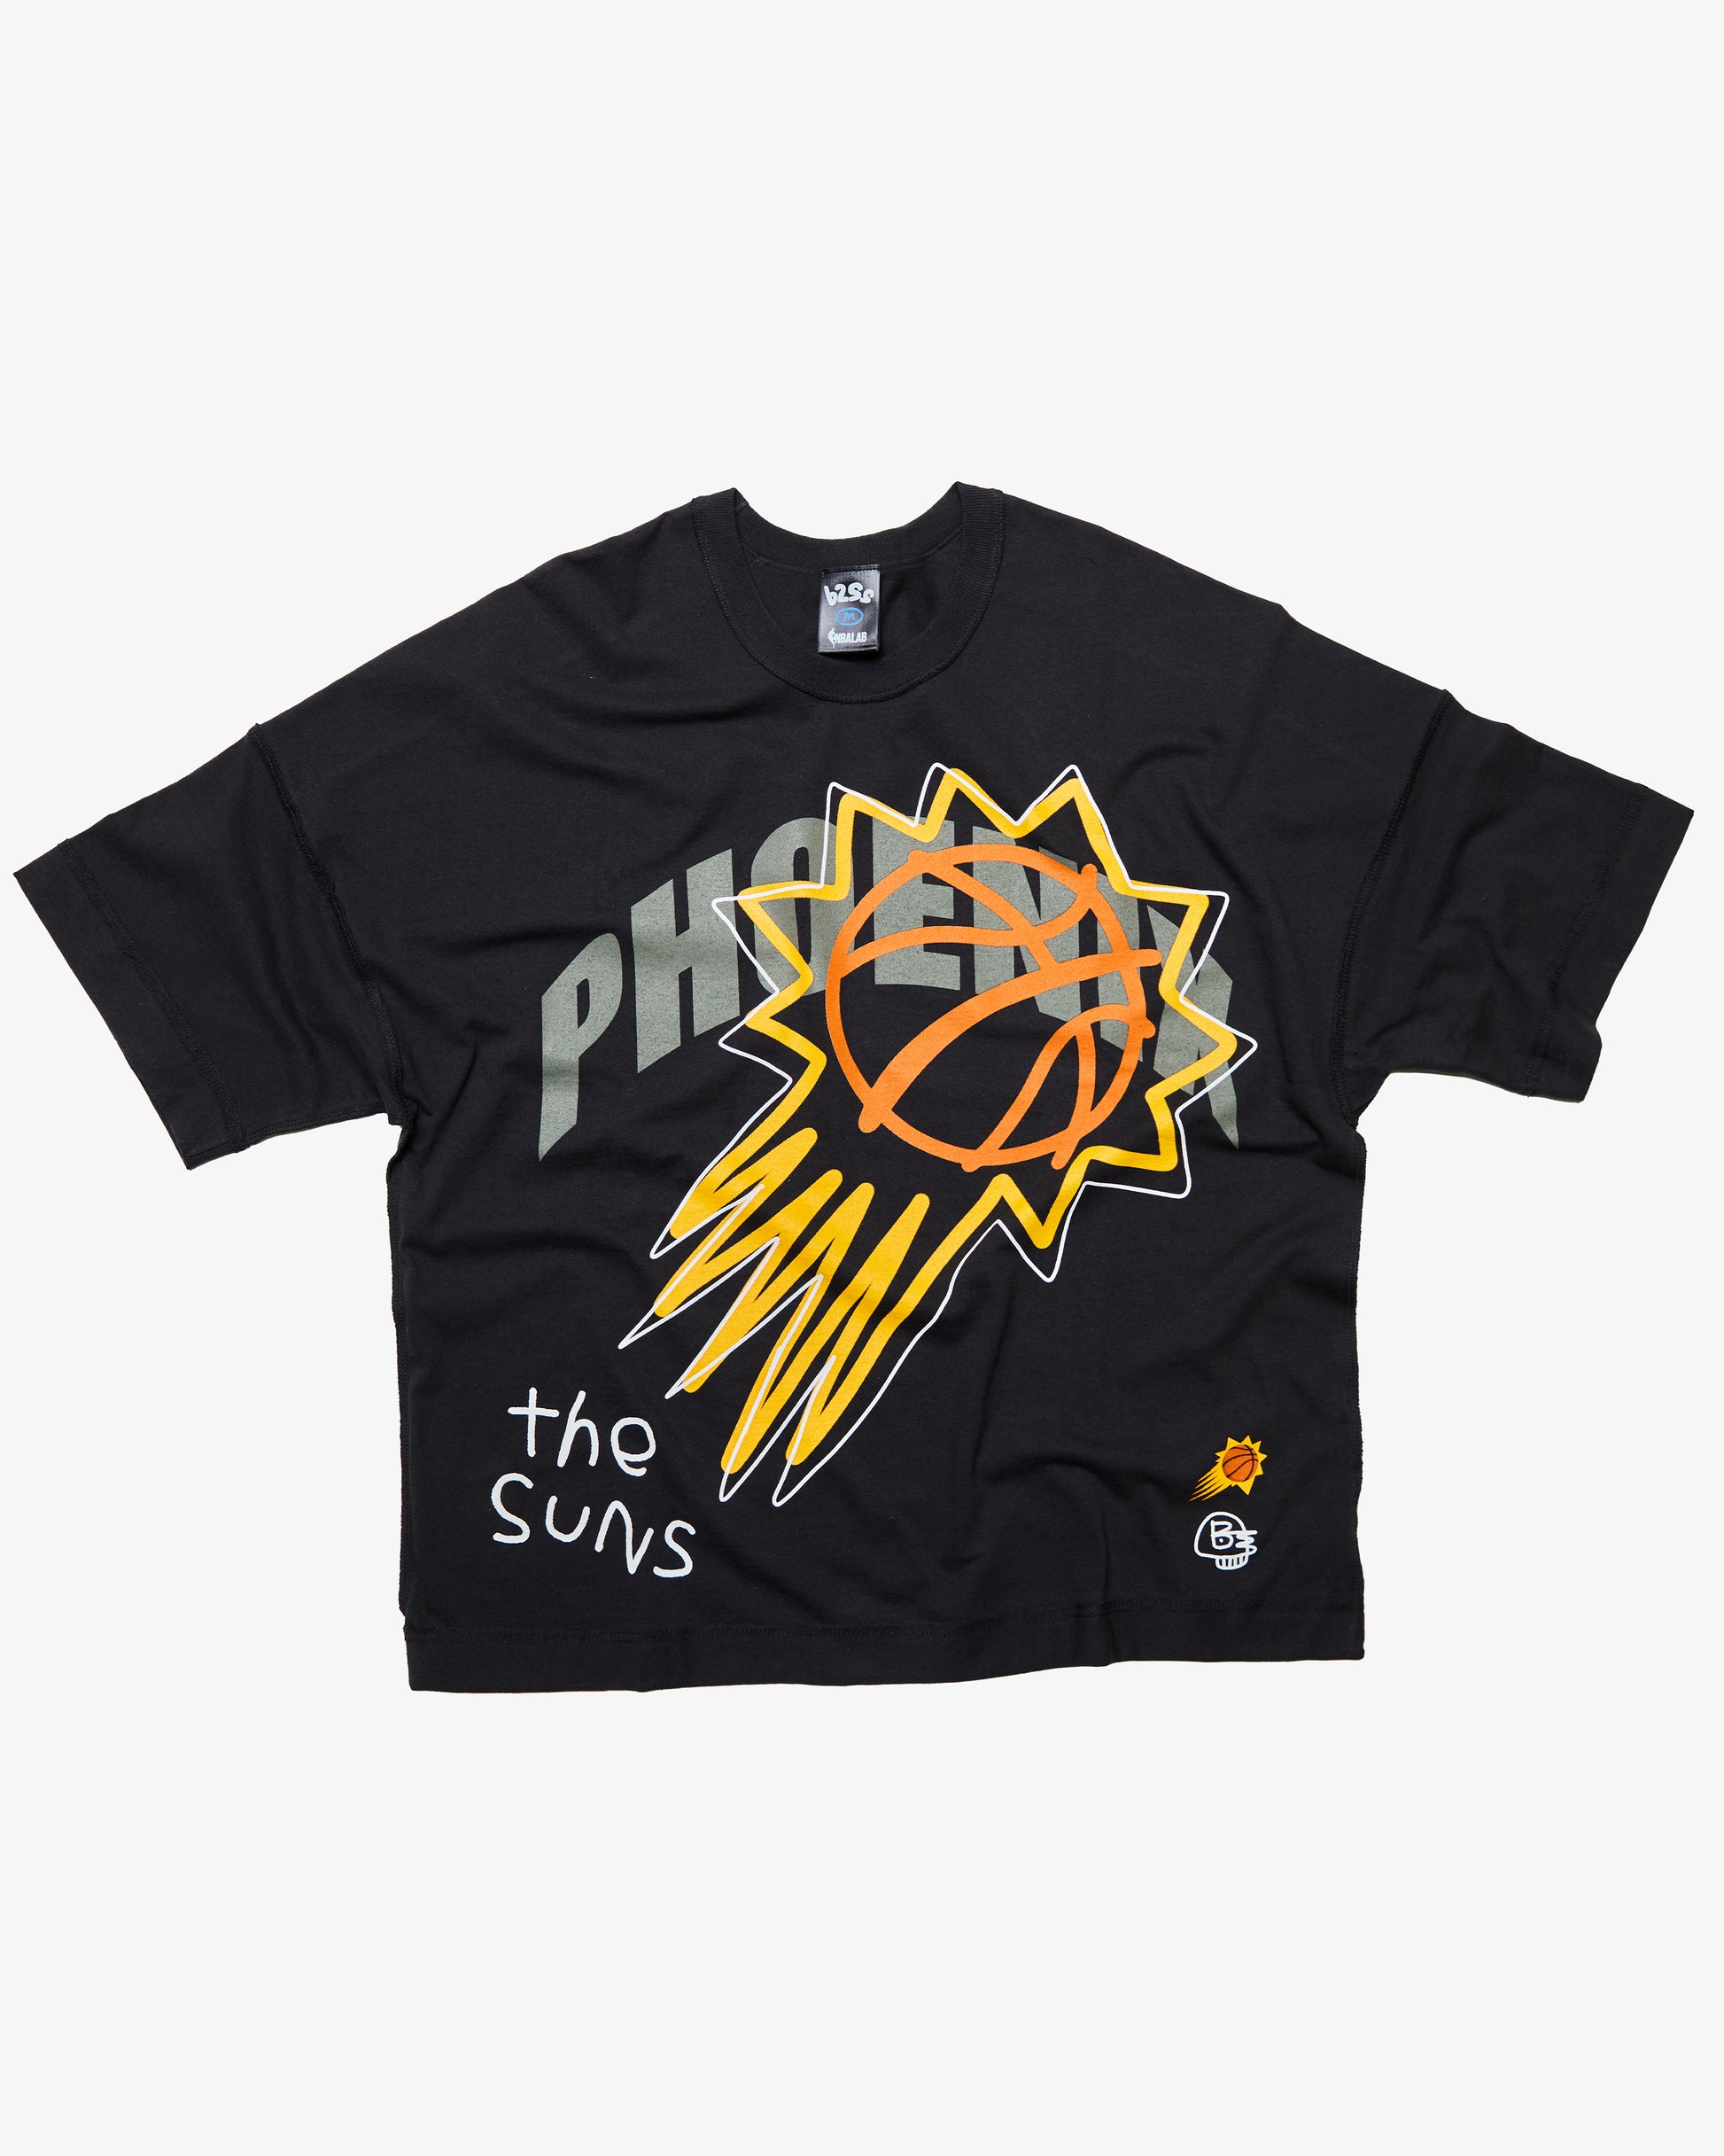 Cheap Phoenix Suns Apparel, Discount Suns Gear, NBA Suns